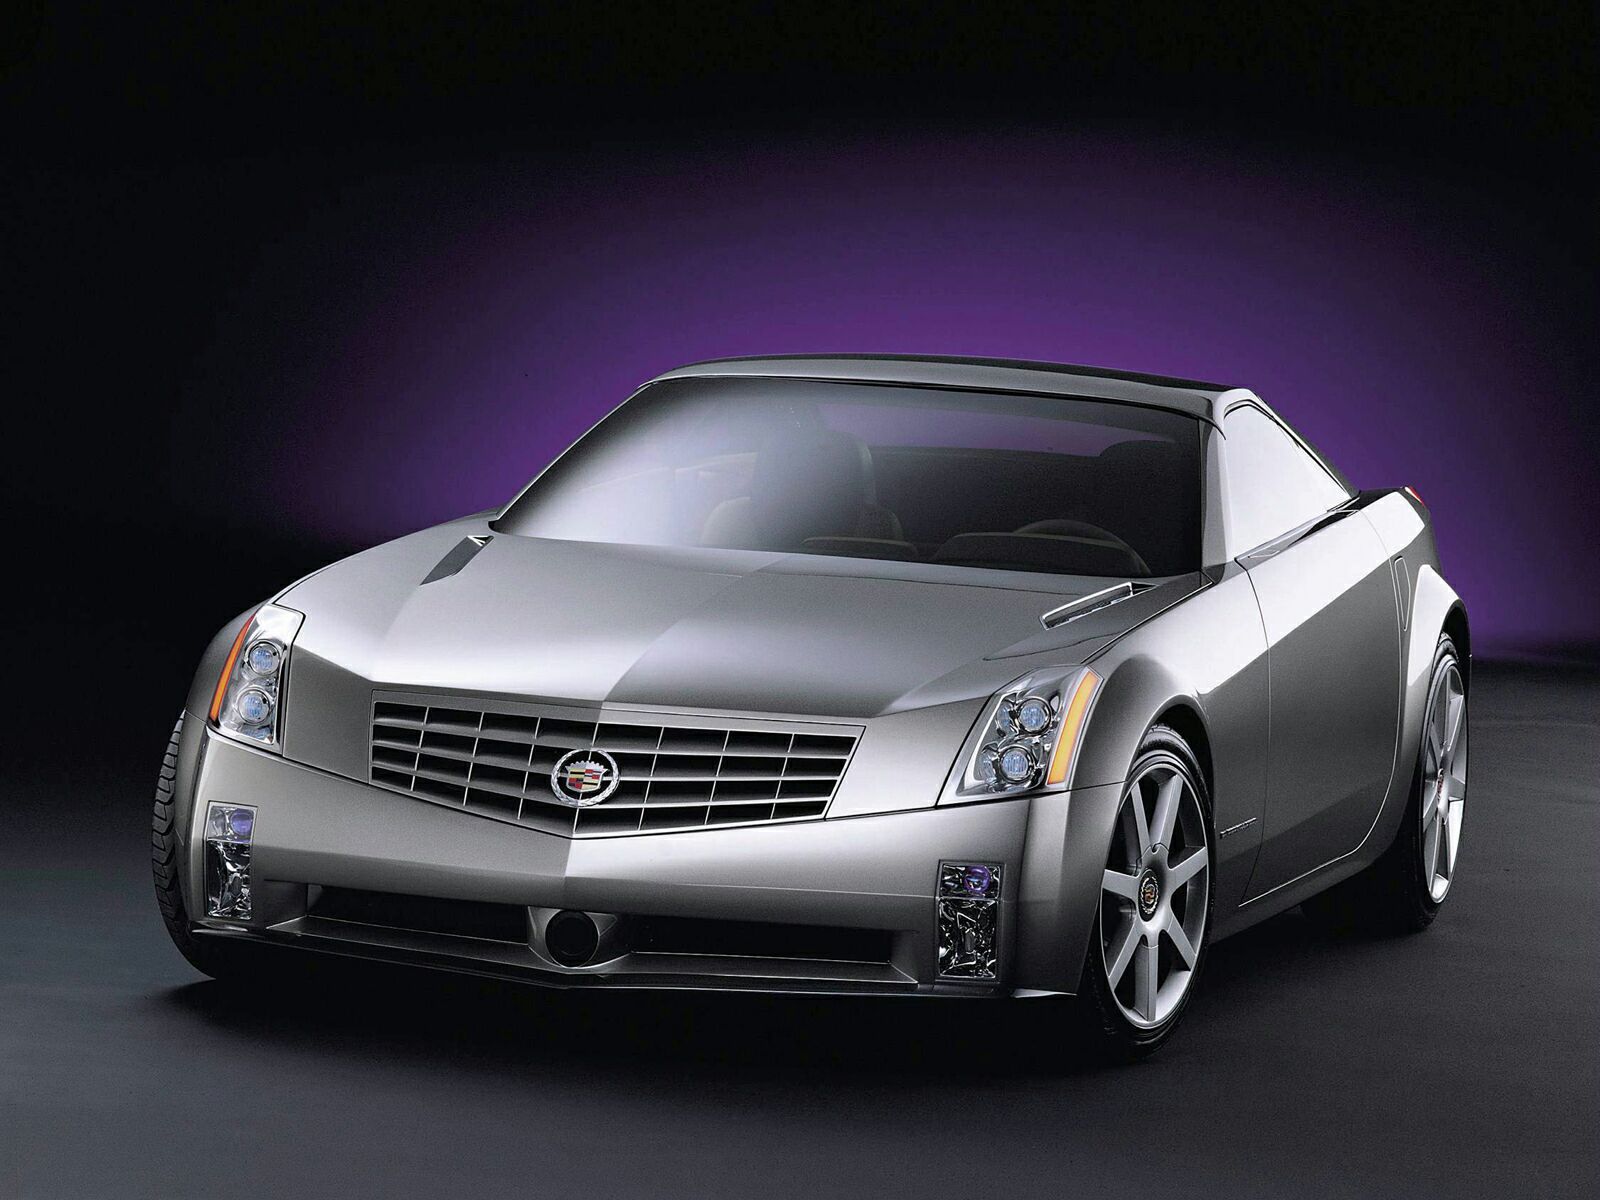 Cadillac Evoq (1999) - Old Concept Cars